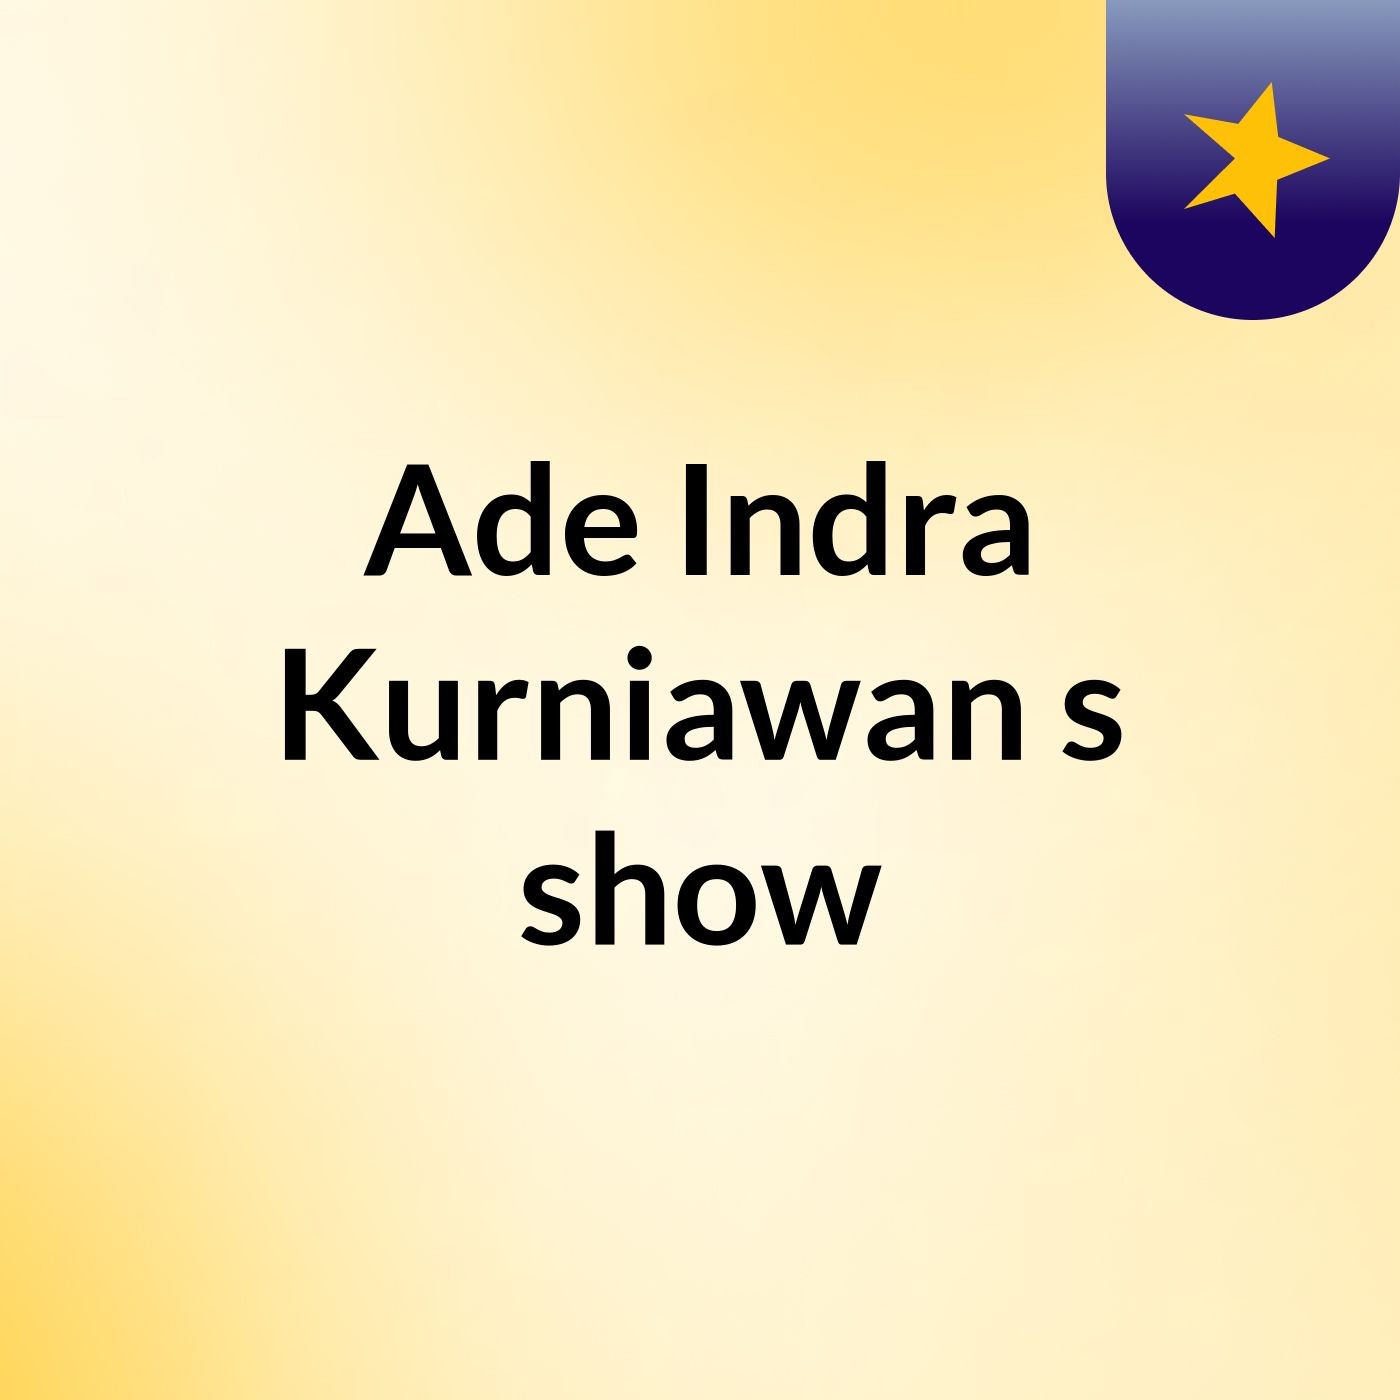 Ade Indra Kurniawan's show